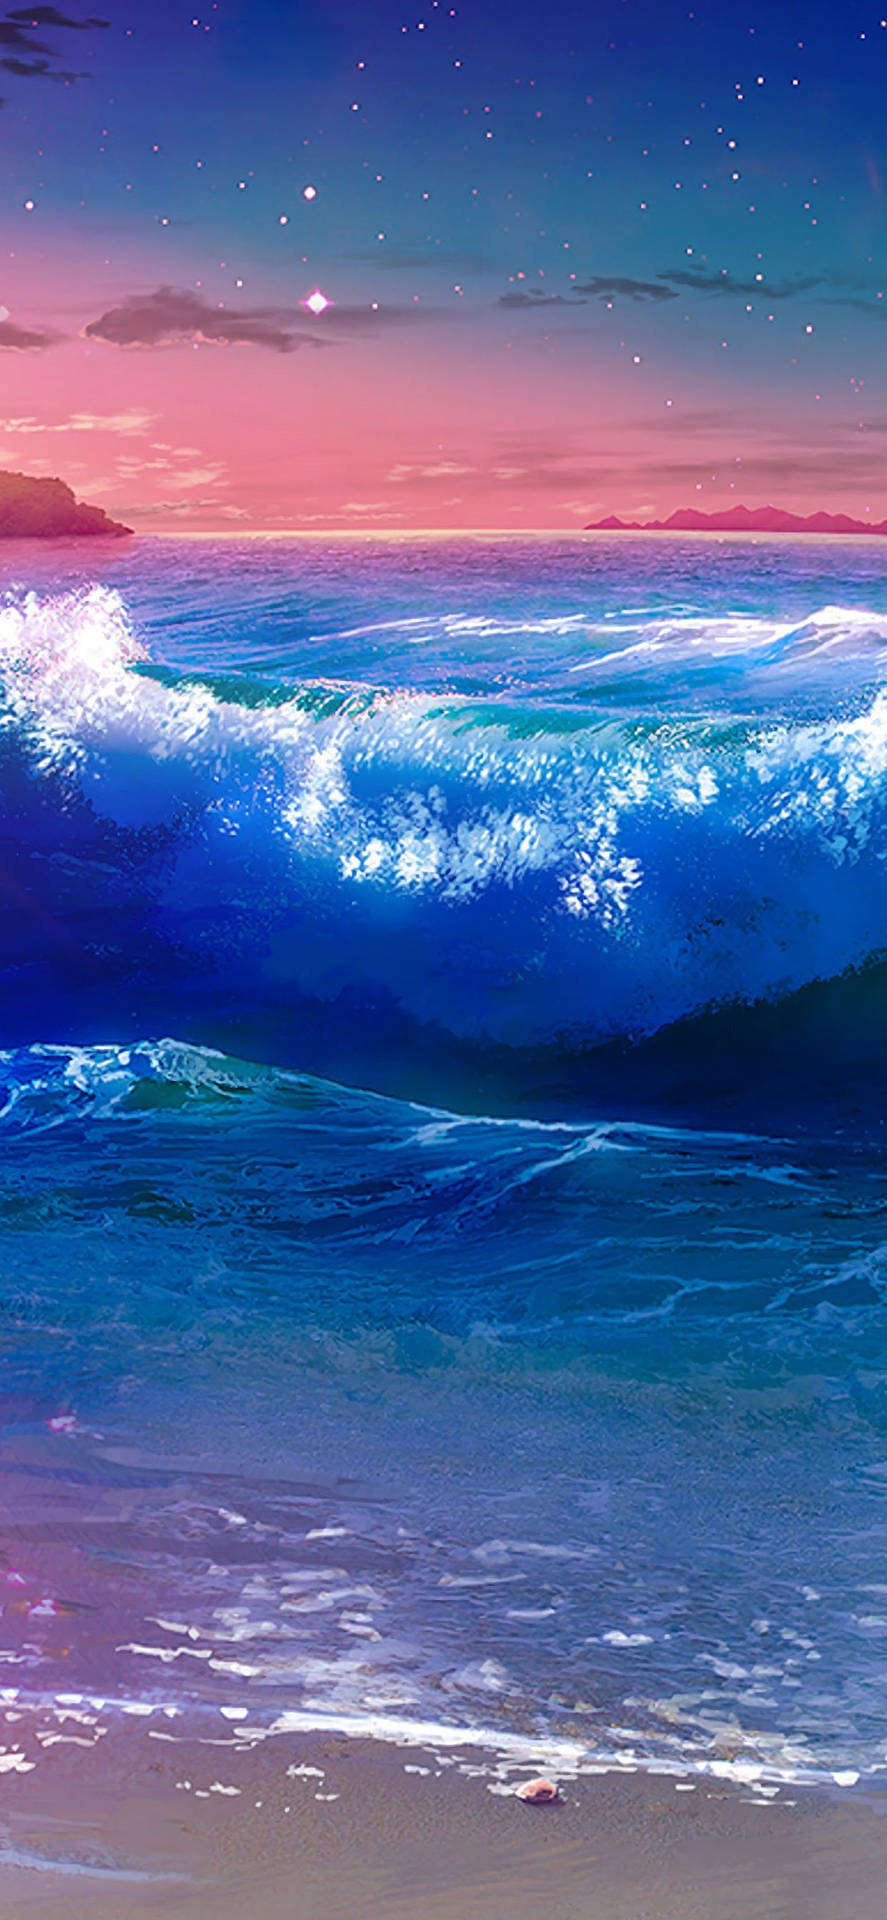 Download 4k iPhone Waves Under Starry Sky On Beach Wallpaper